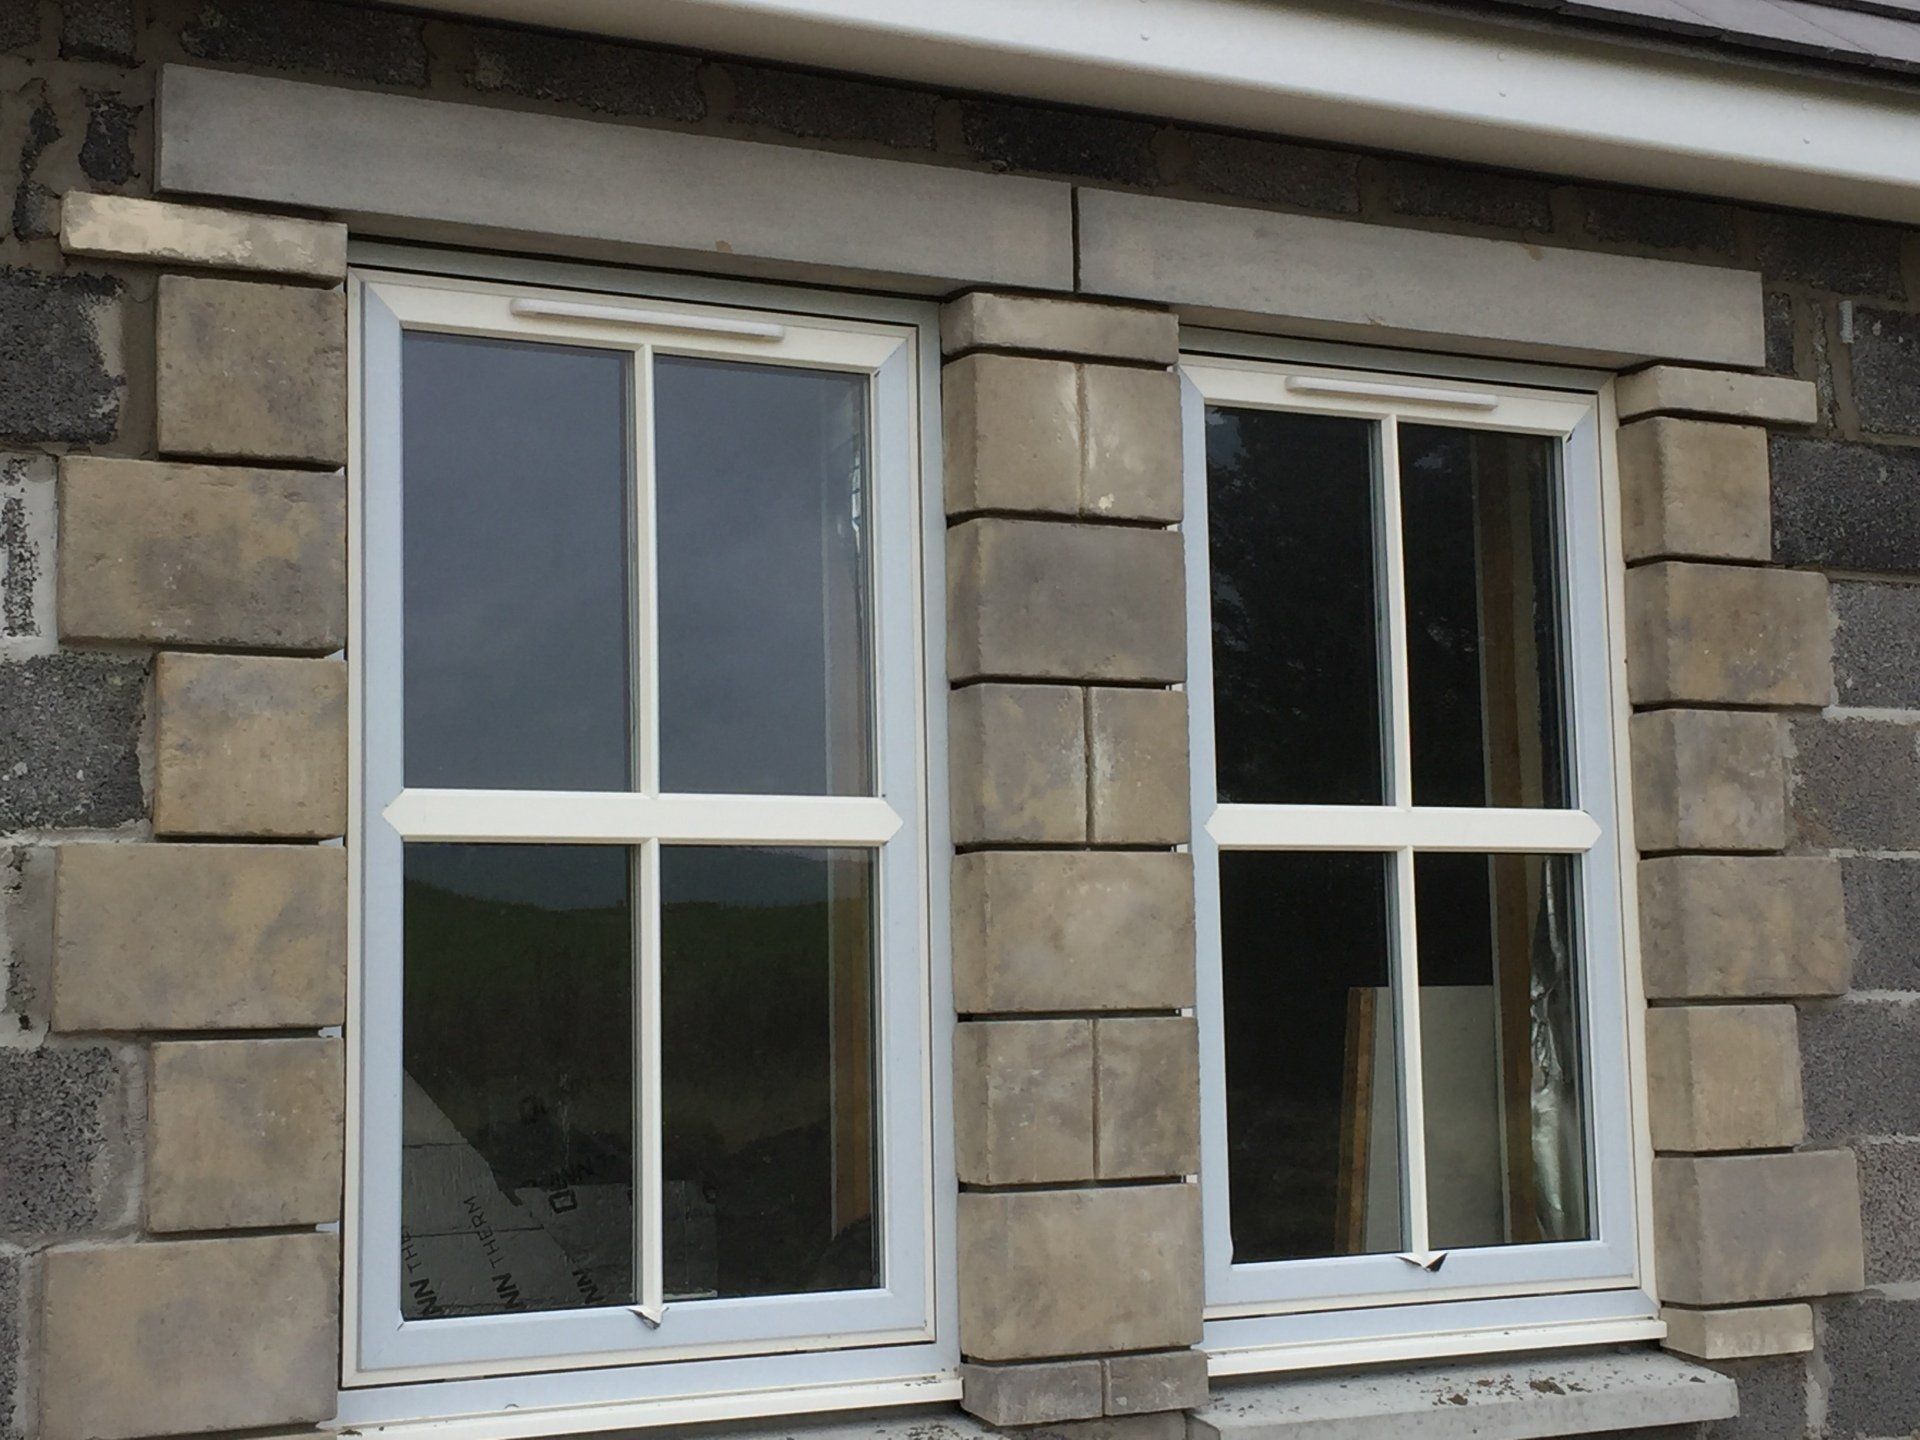 Bespoke stone feature around window